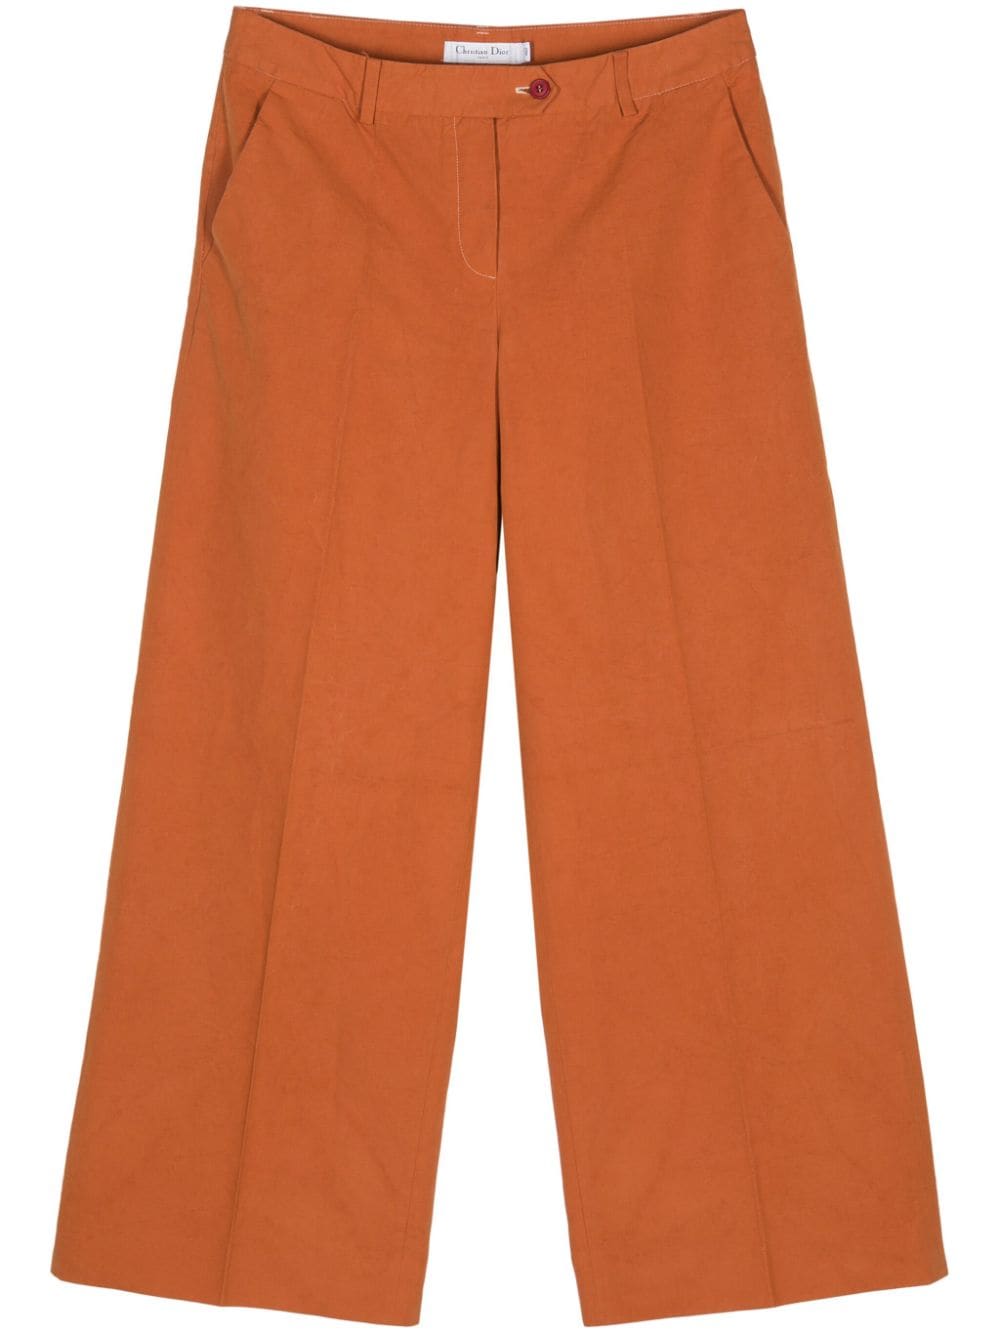 Christian Dior Pre-Owned Pantaloni anni 2000 - Arancione